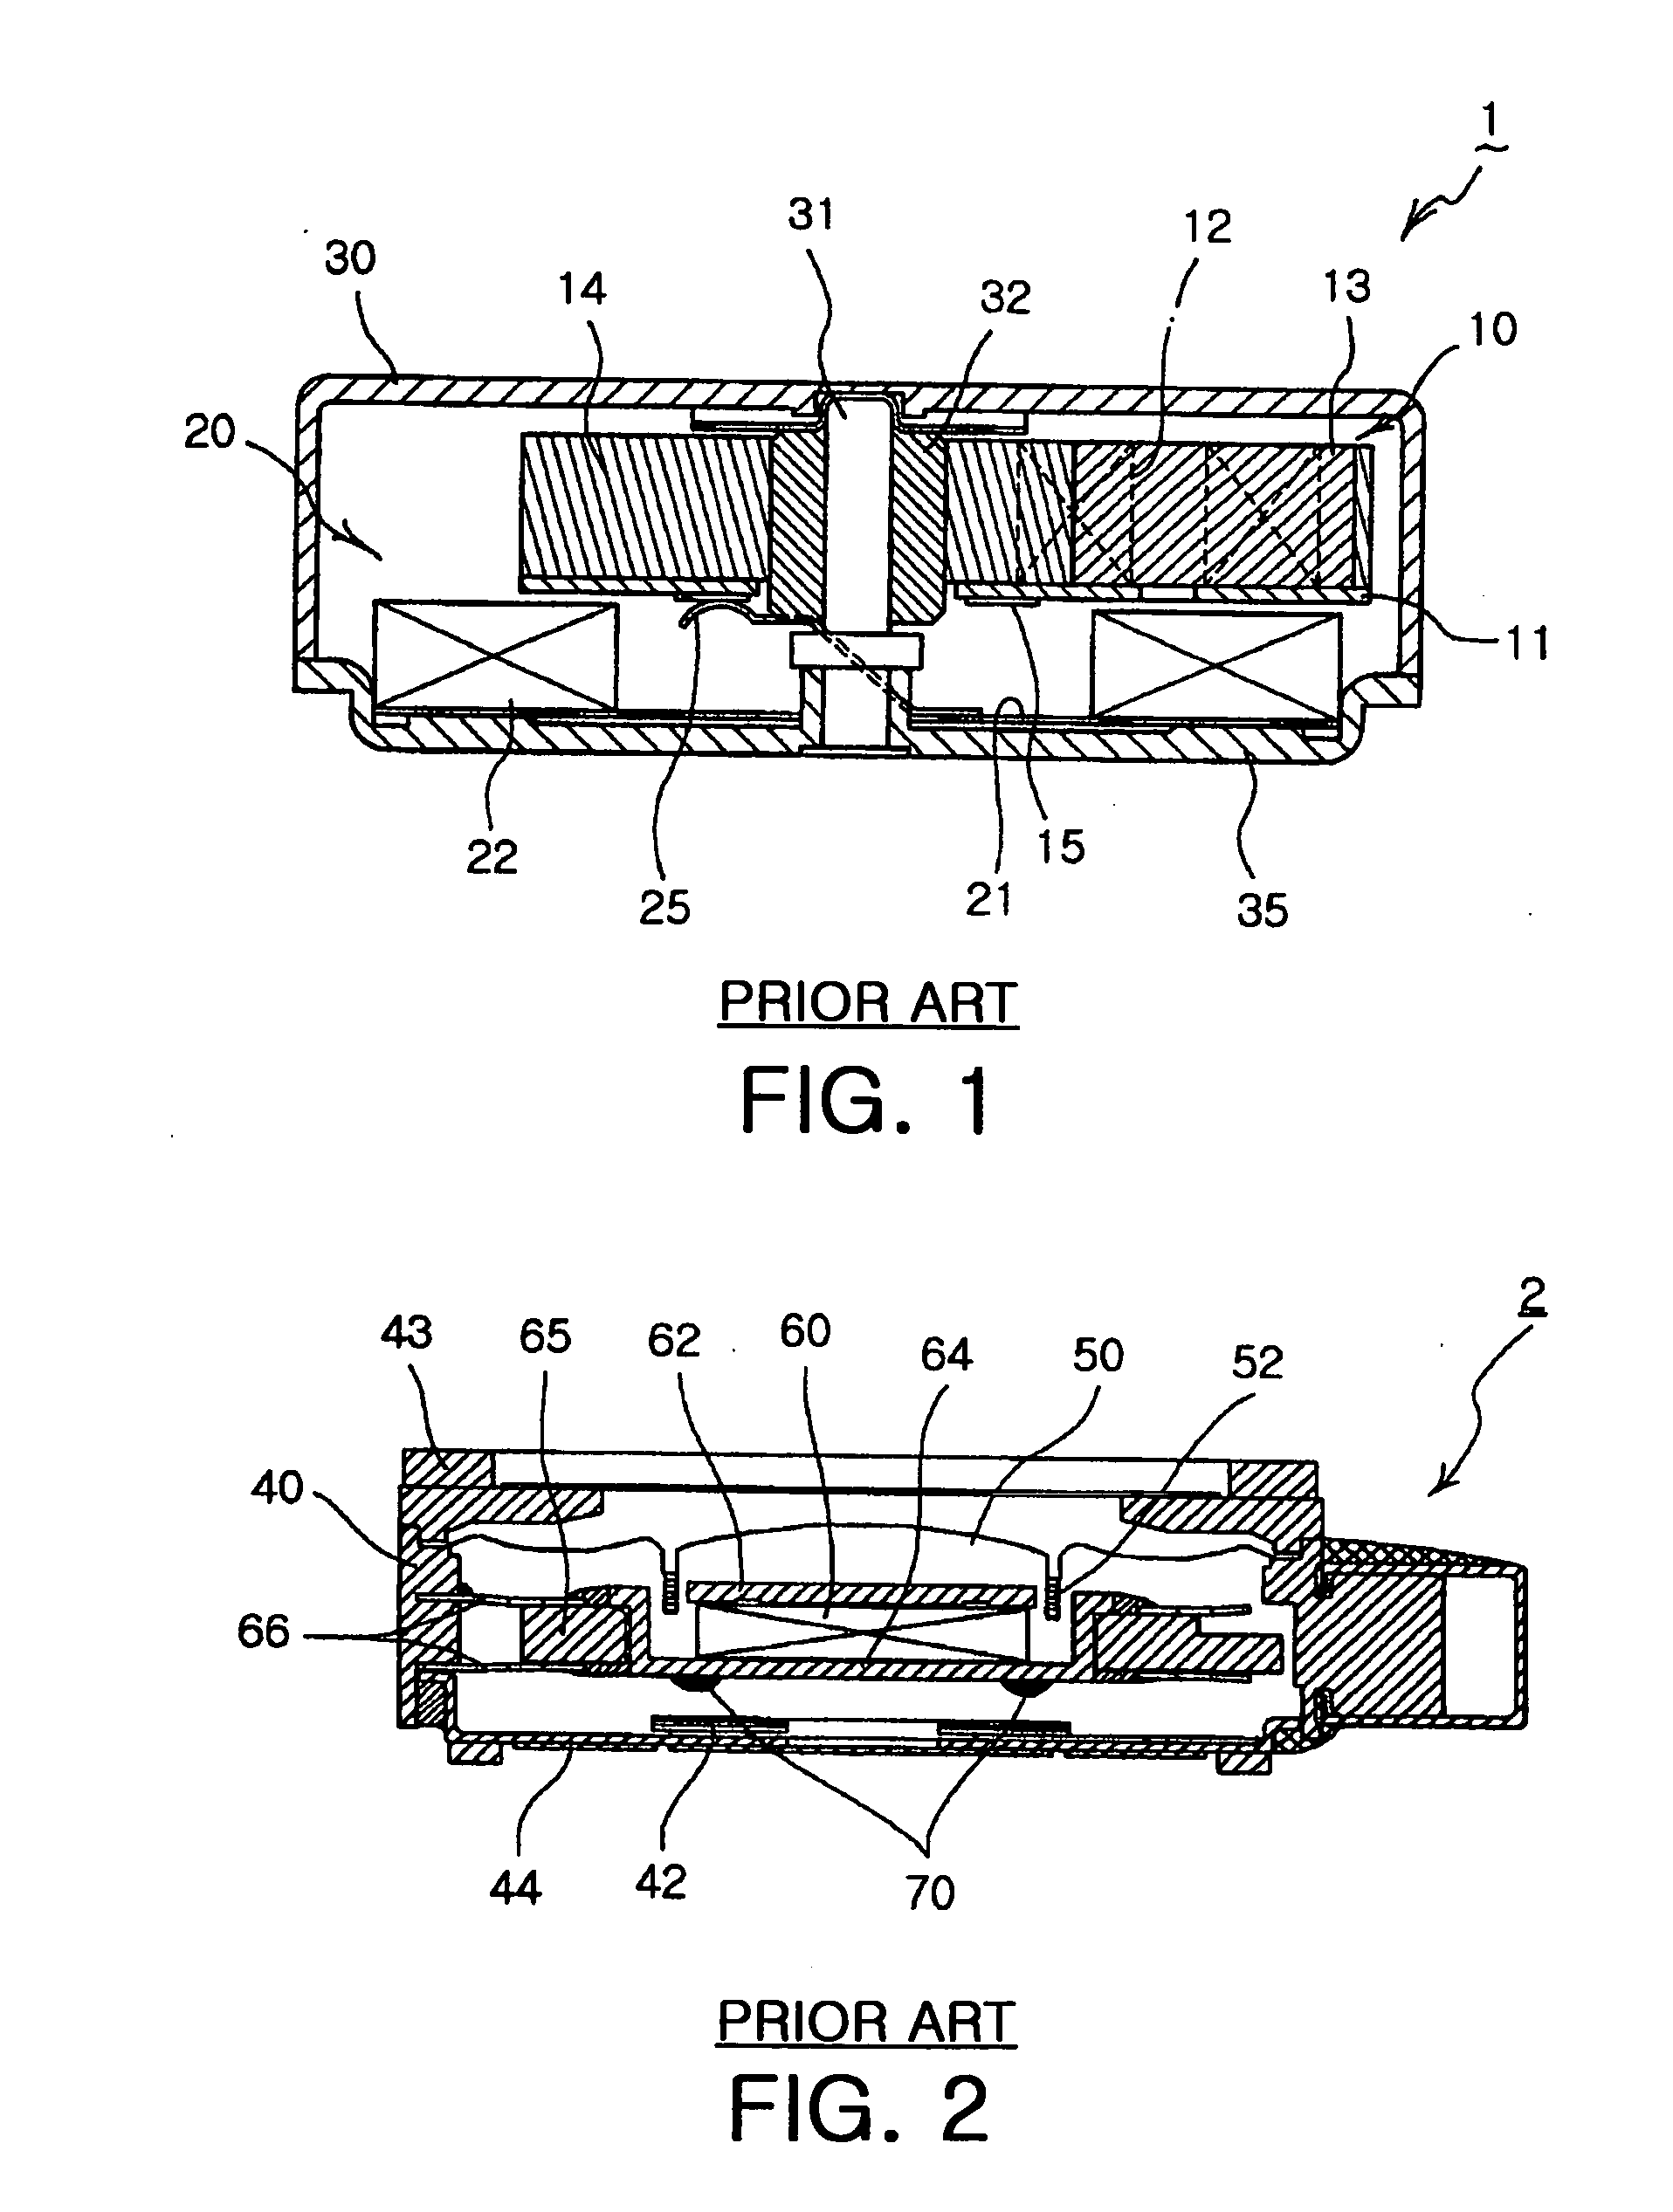 Pattern coil type vertical vibrator